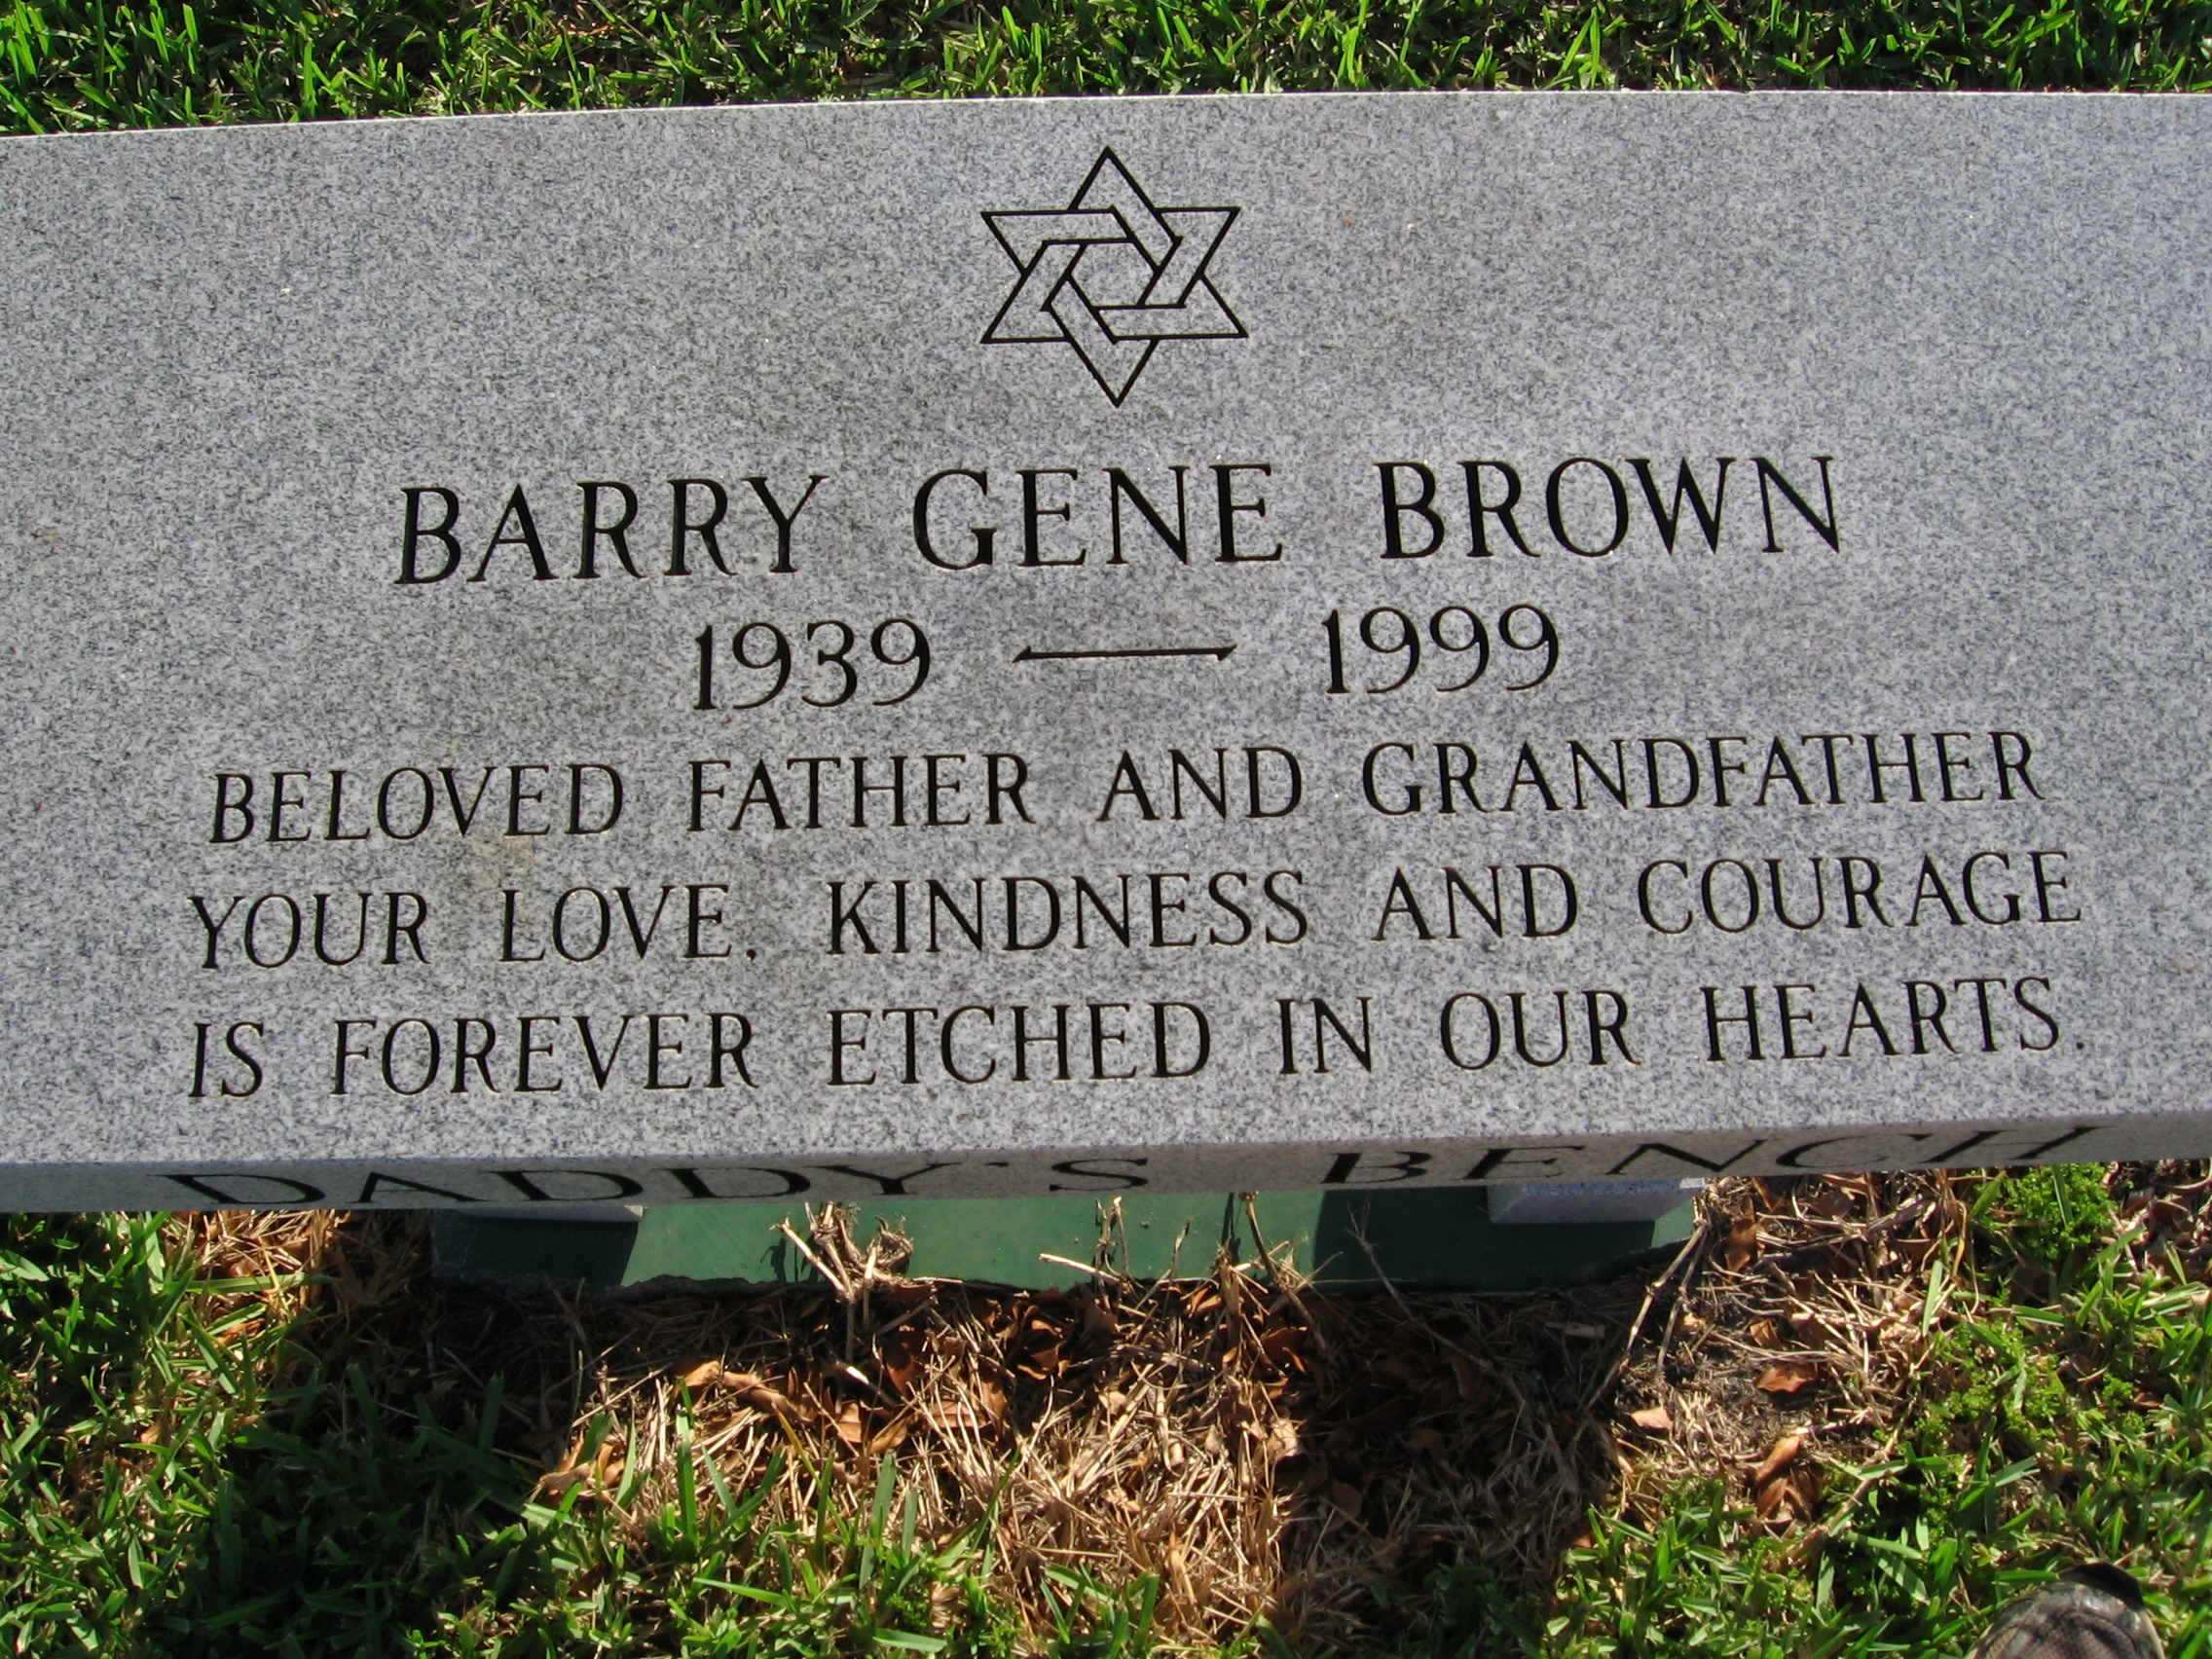 Barry Gene Brown